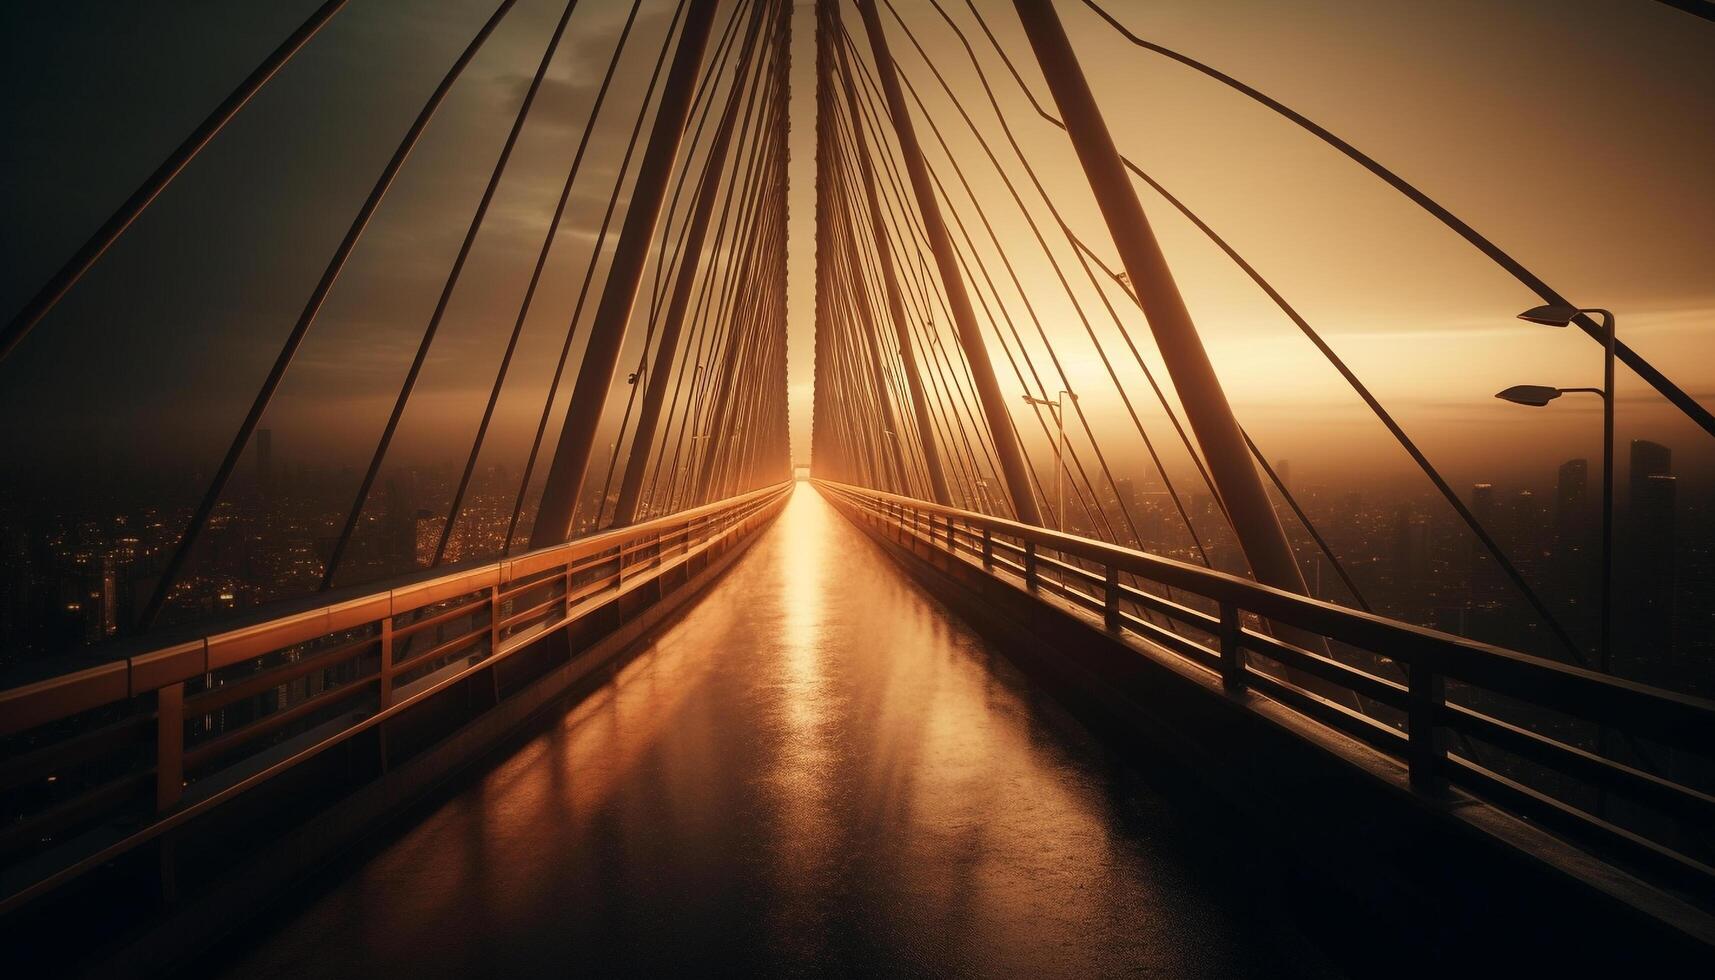 Steel suspension bridge reflects sunset over water, vanishing point illuminated generated by AI photo